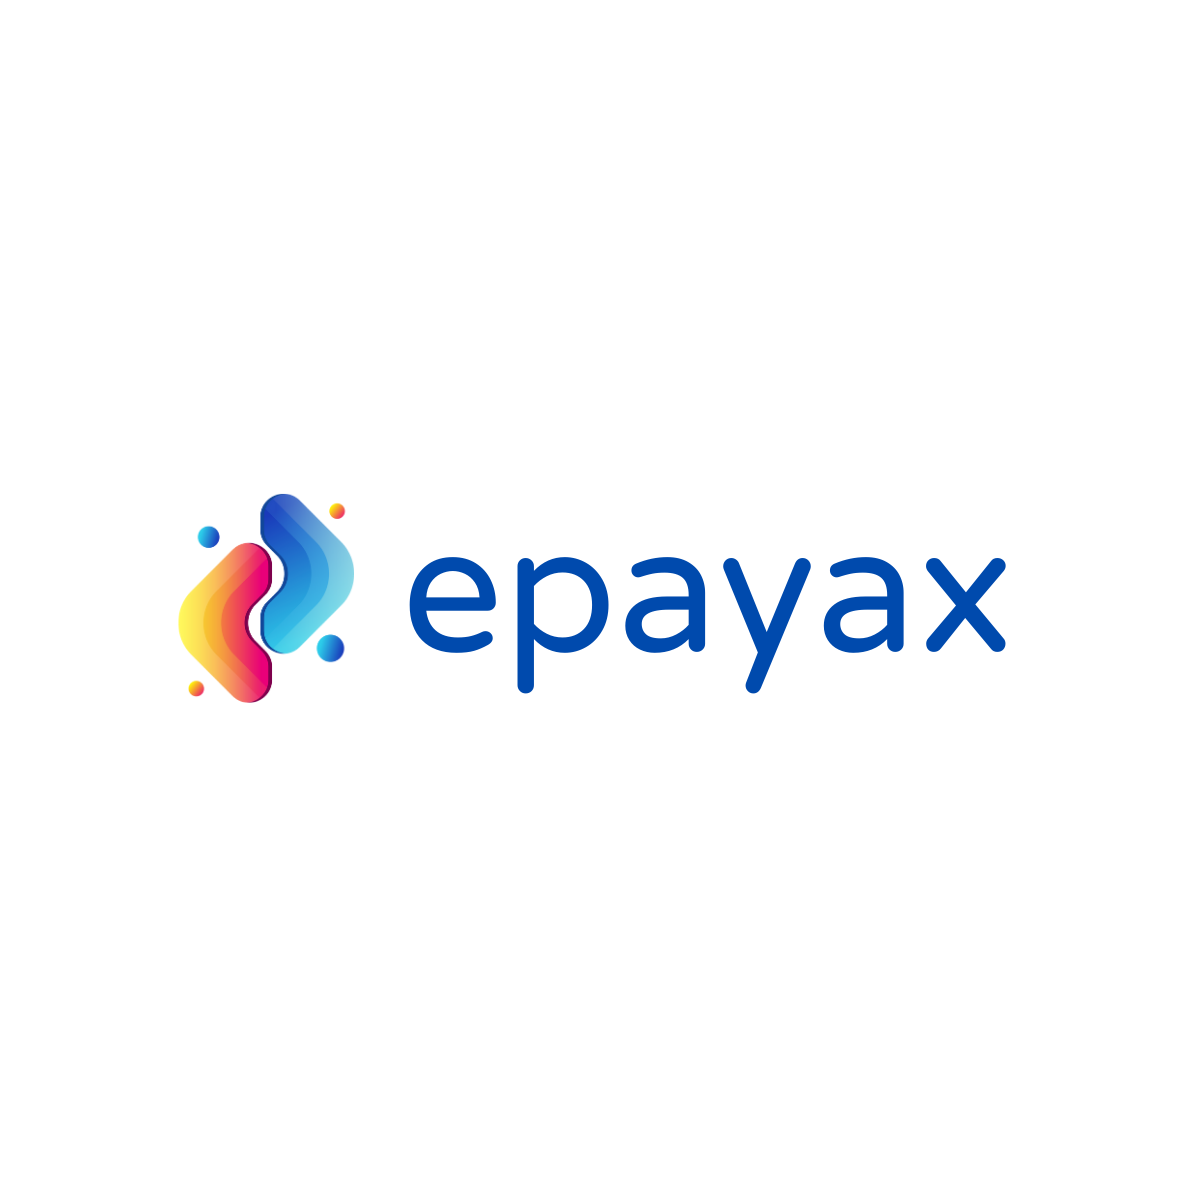 epayax.com - domain for sale